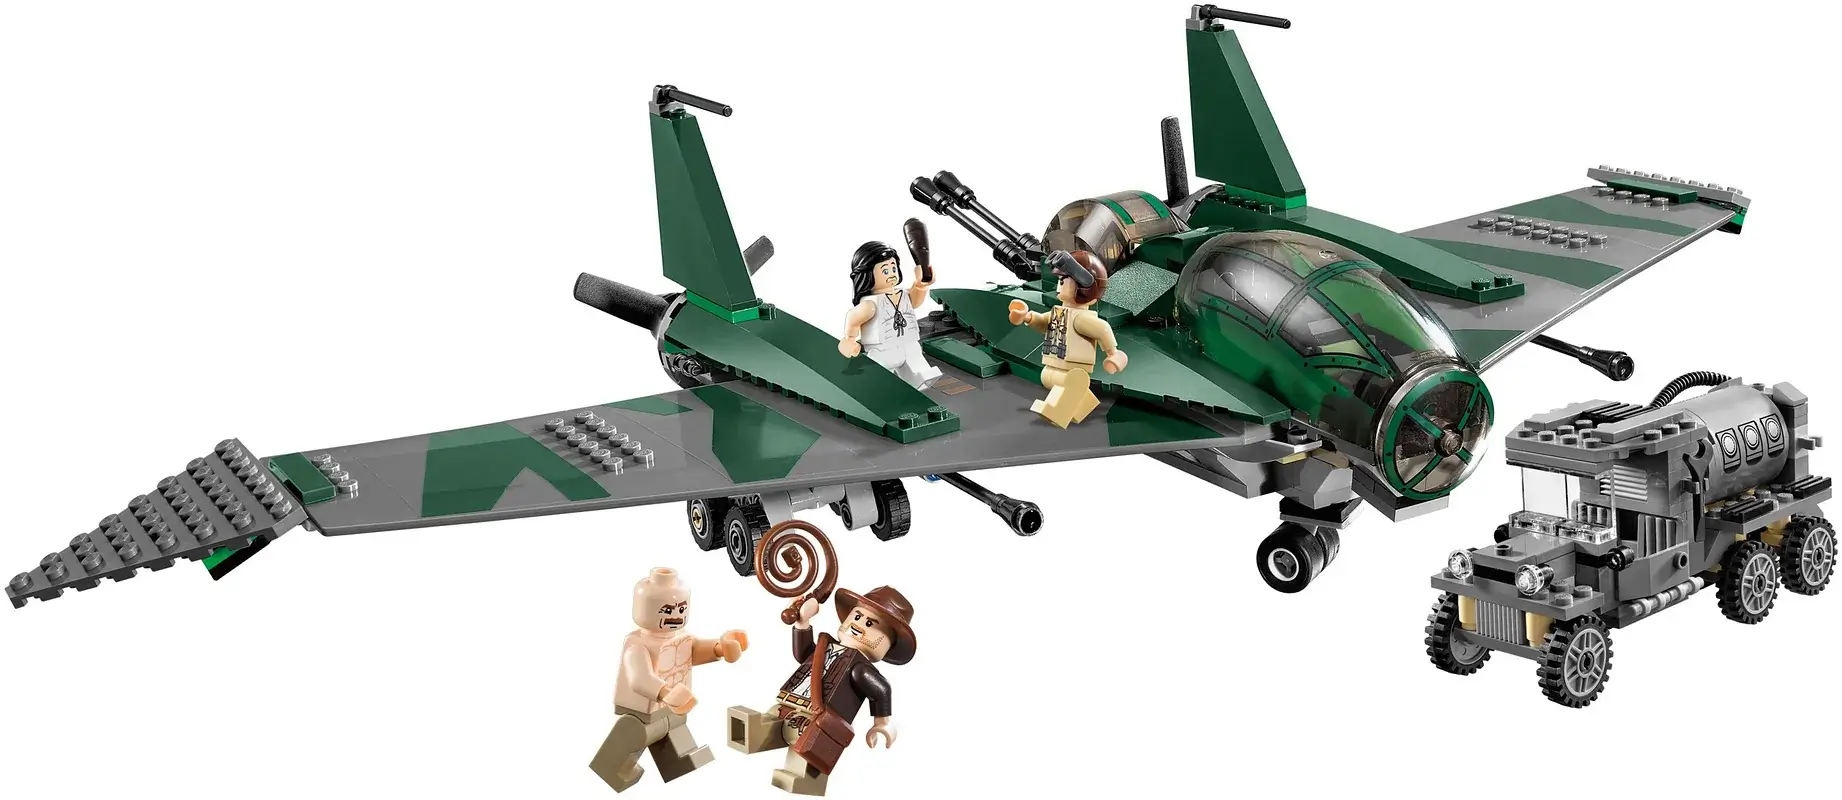 Lot samolotem z serii LEGO® Indiania Jones™